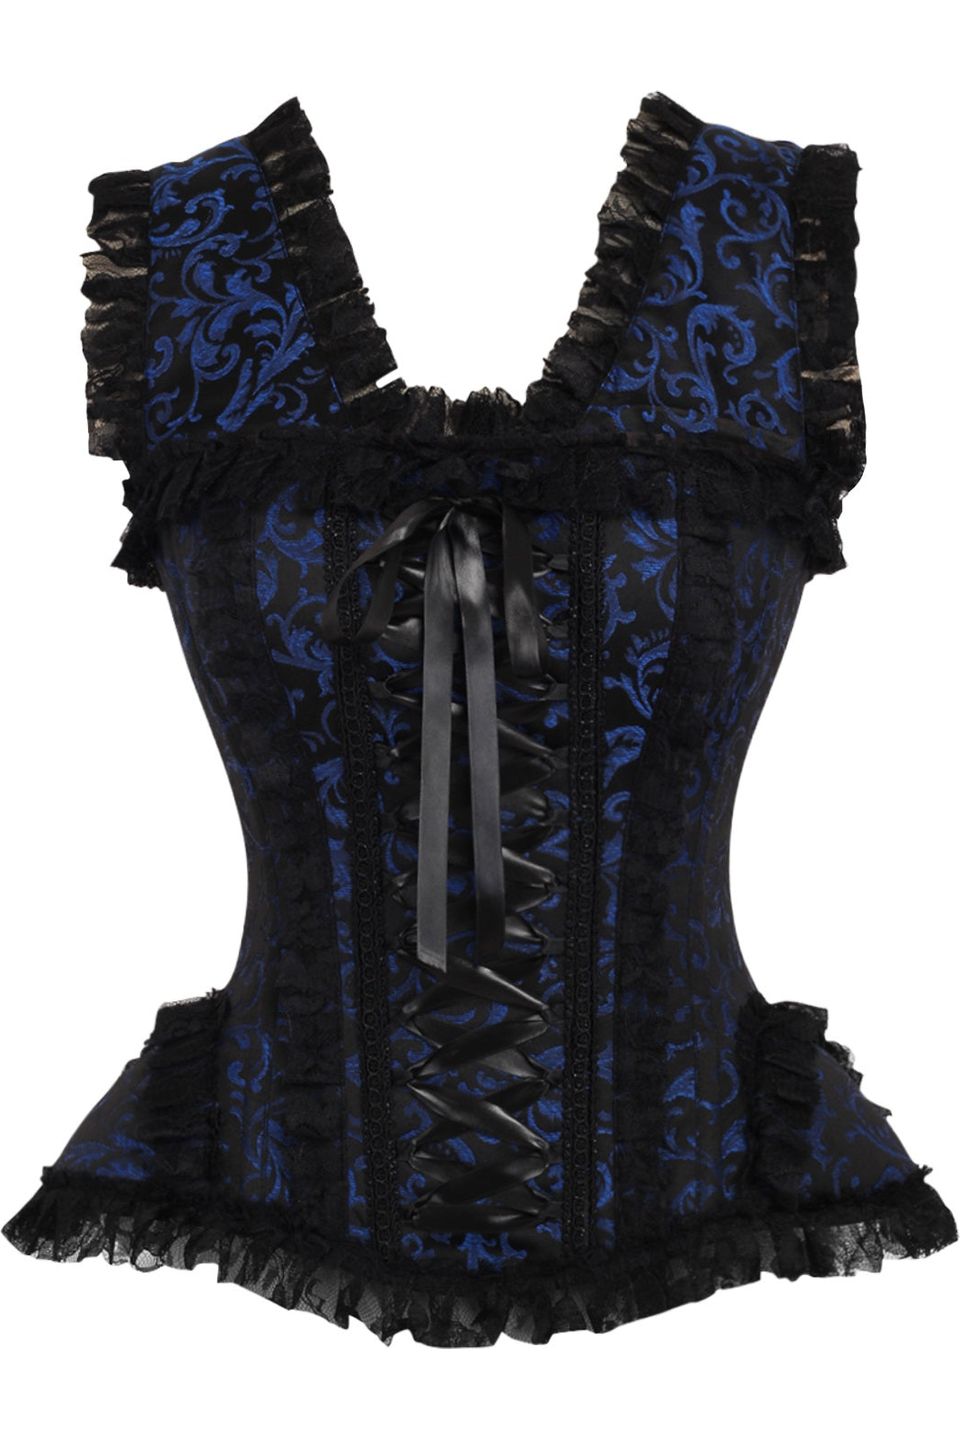 Top Drawer Blue/Black Swirl Brocade & Lace Steel Boned Corset w/Cap Sleeves